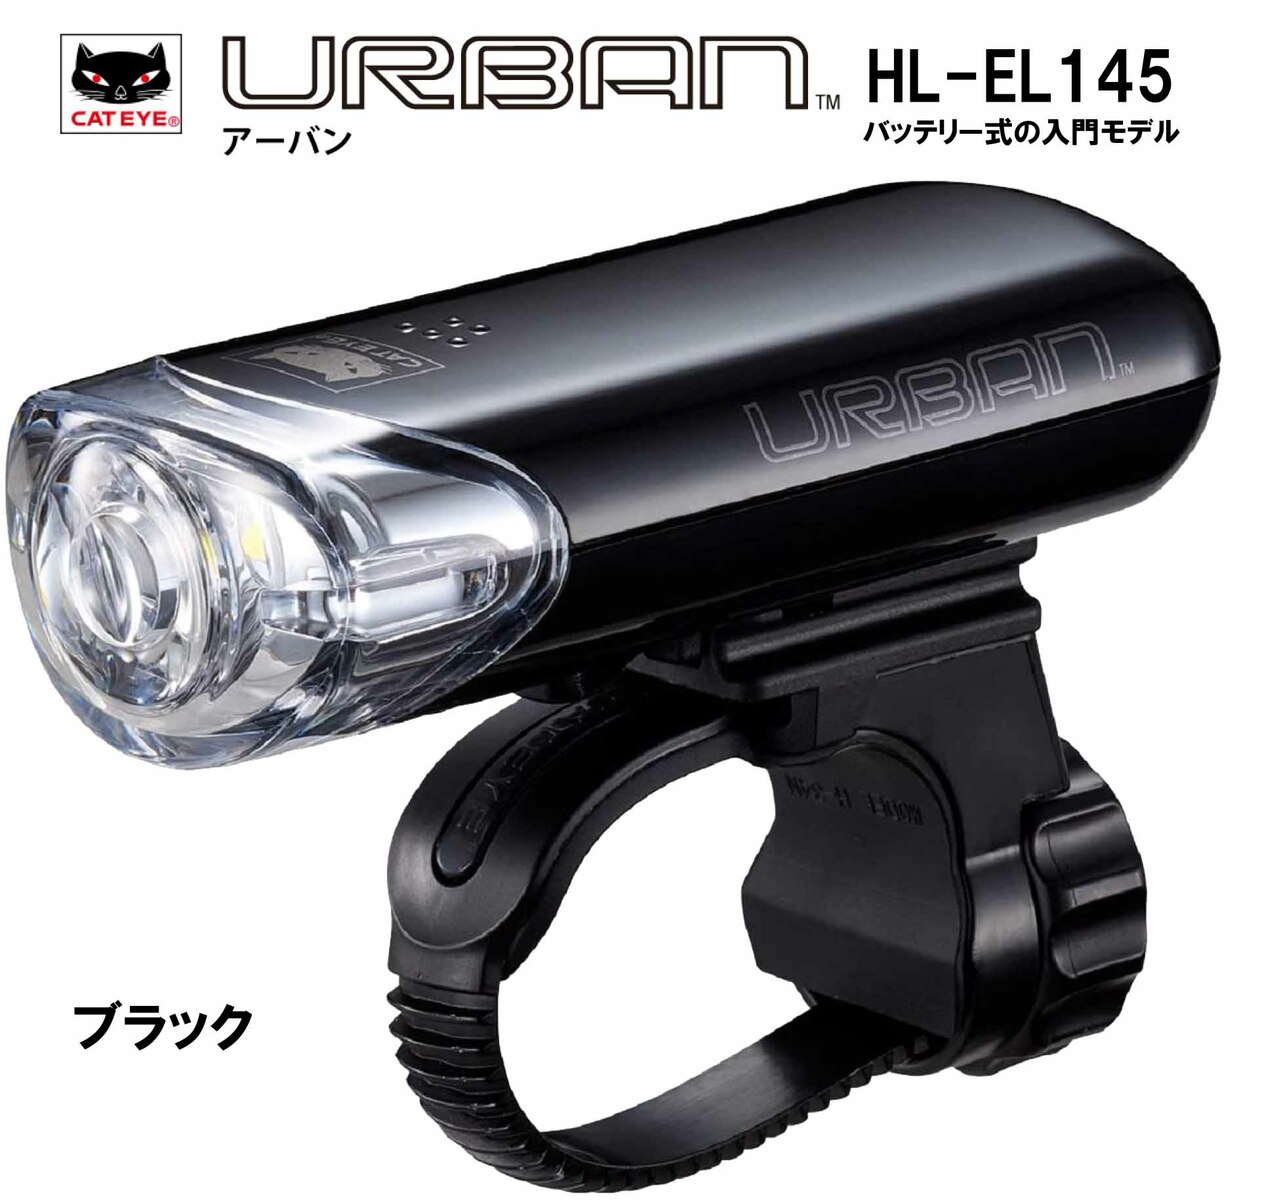 1LEDヘッドライト自転車用 LEDライト 理想的な配光を実現 HL-EL145 URBAN EL-140 後継 ライト LED ヘッドライト ハンドル ライト 電池式 ブラック 黒